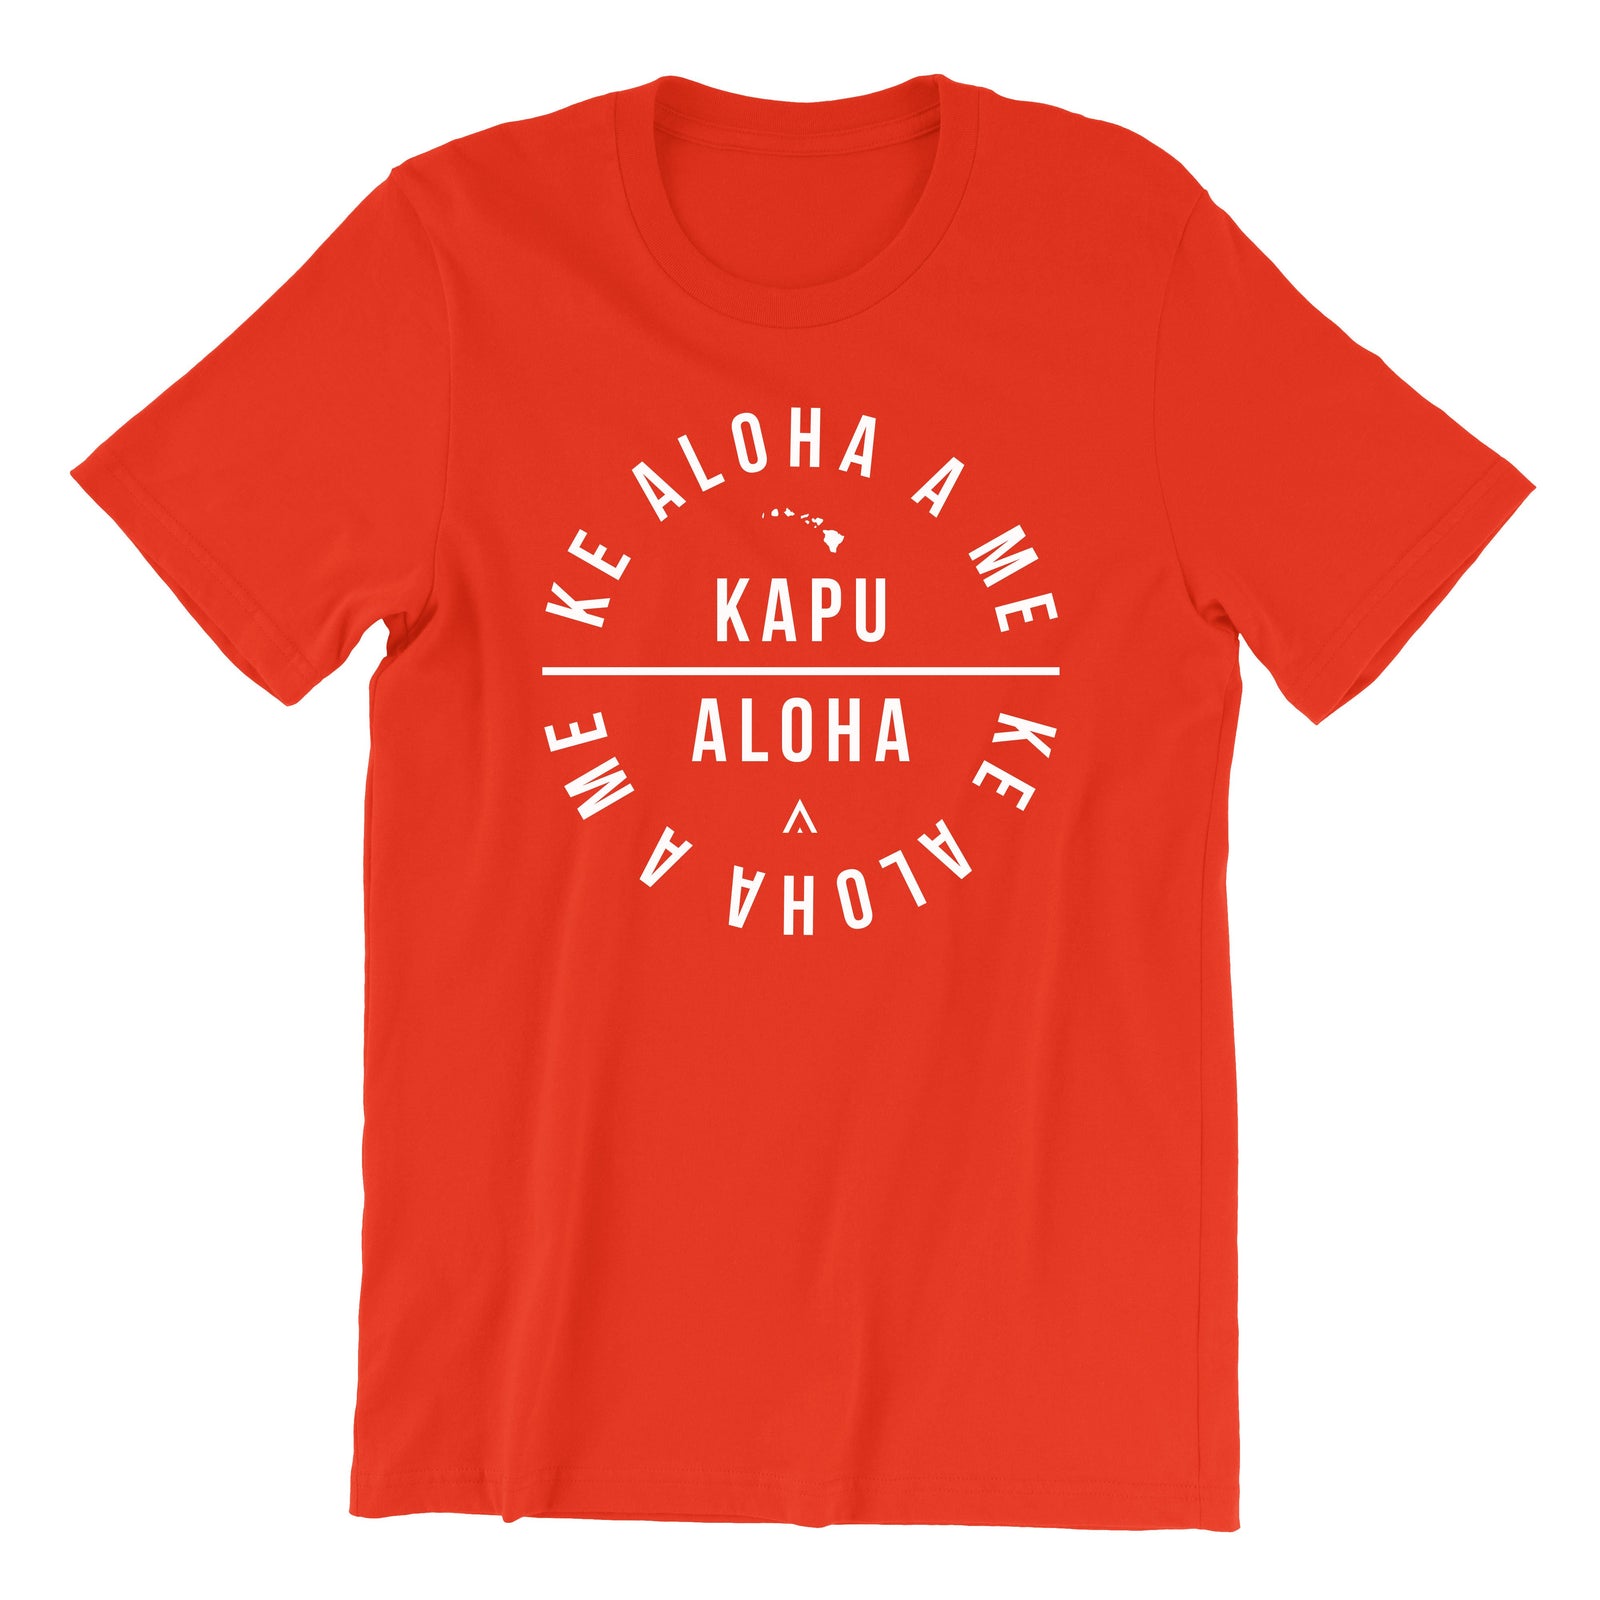 Pop-Up Mākeke - Aloha Ke Akua Clothing - Kapu Aloha Men's Short Sleeve T-Shirt - Poppy